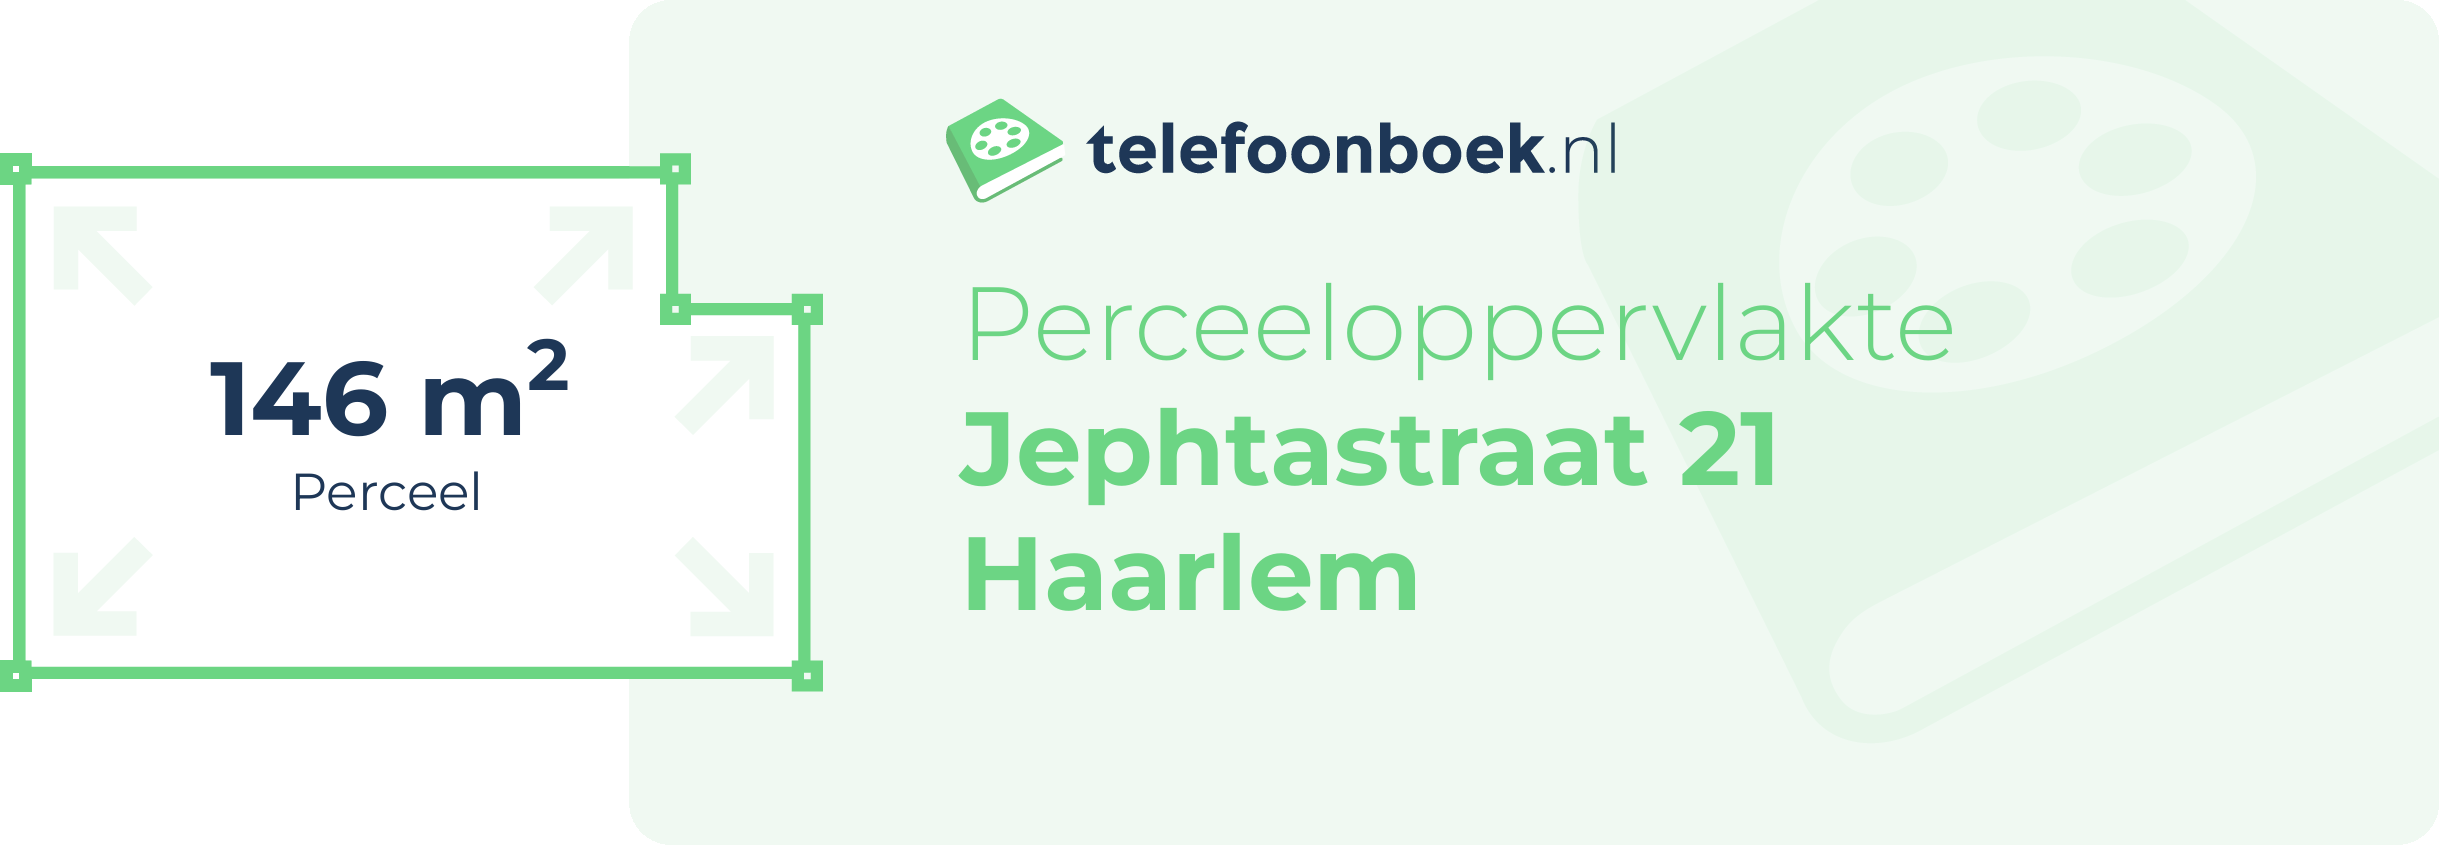 Perceeloppervlakte Jephtastraat 21 Haarlem